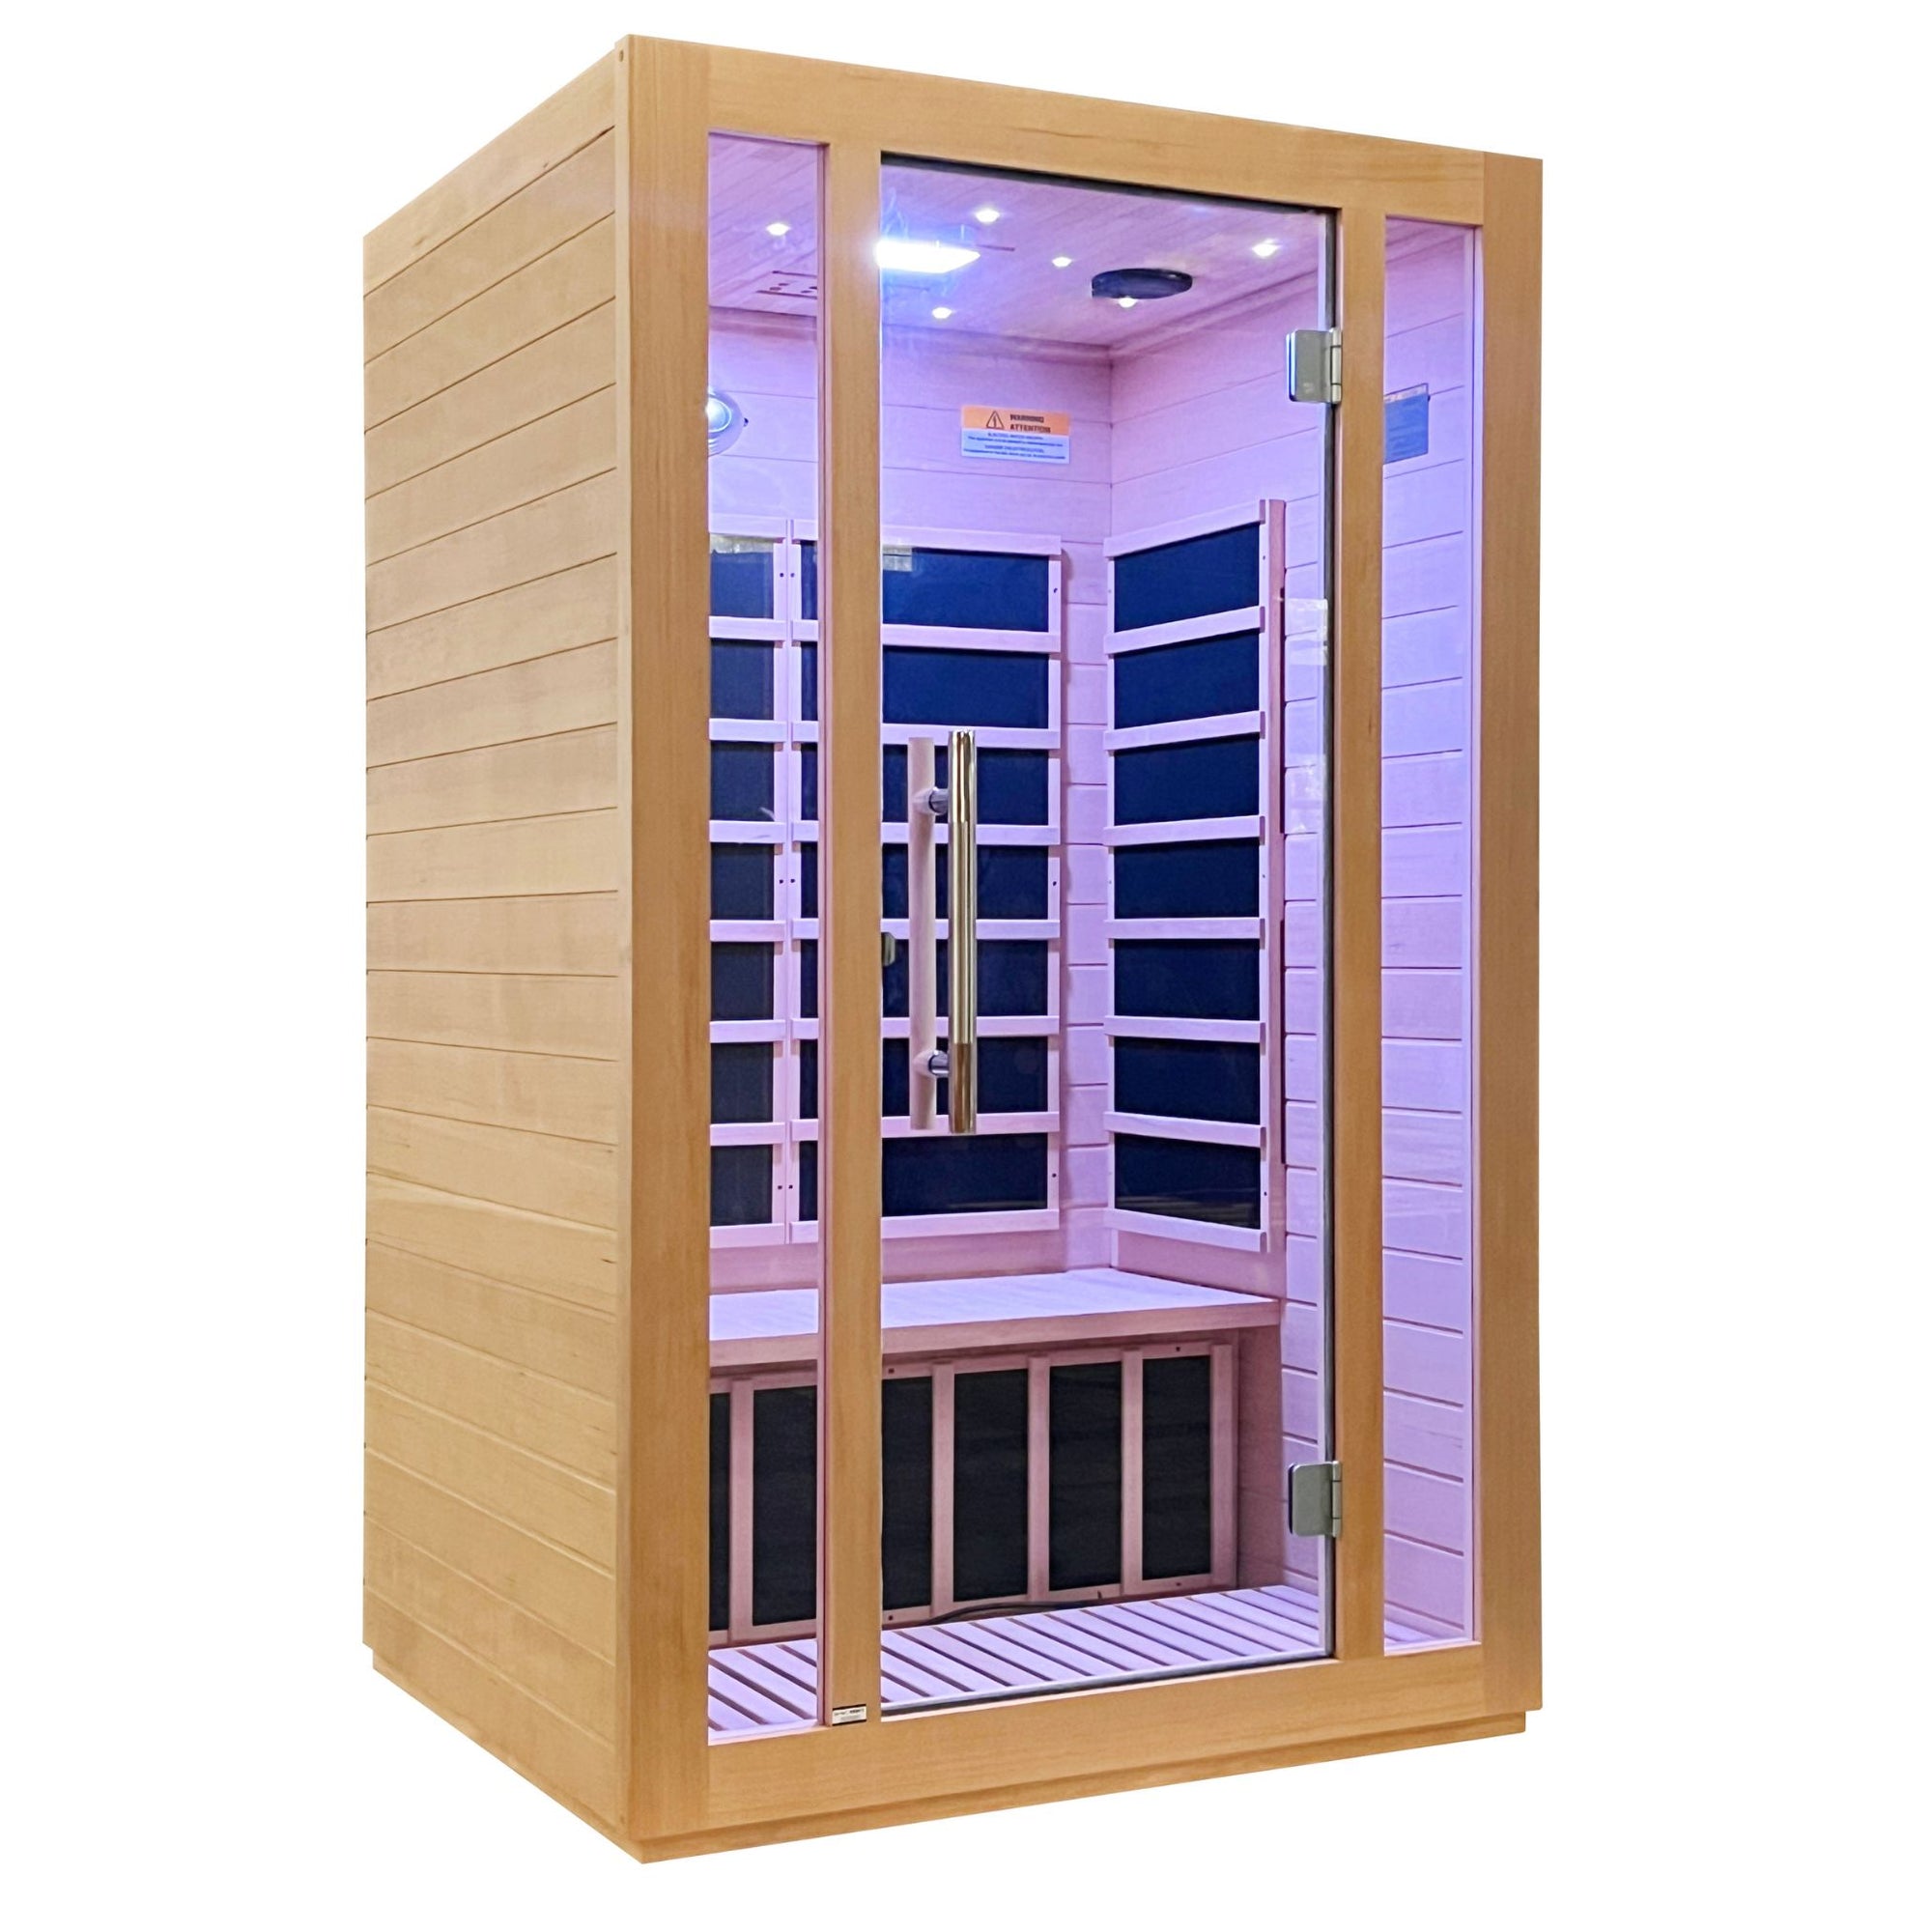 SteamSpa Home Sauna Room 1-2 Person Hemlock Wooden Indoor Sauna Spa - Bluetooth Speaker, FM, Radio, Oxygen bar, Heating Plate, Three Color Light, Touch Control Panel Temperature SC-SS0008-2P